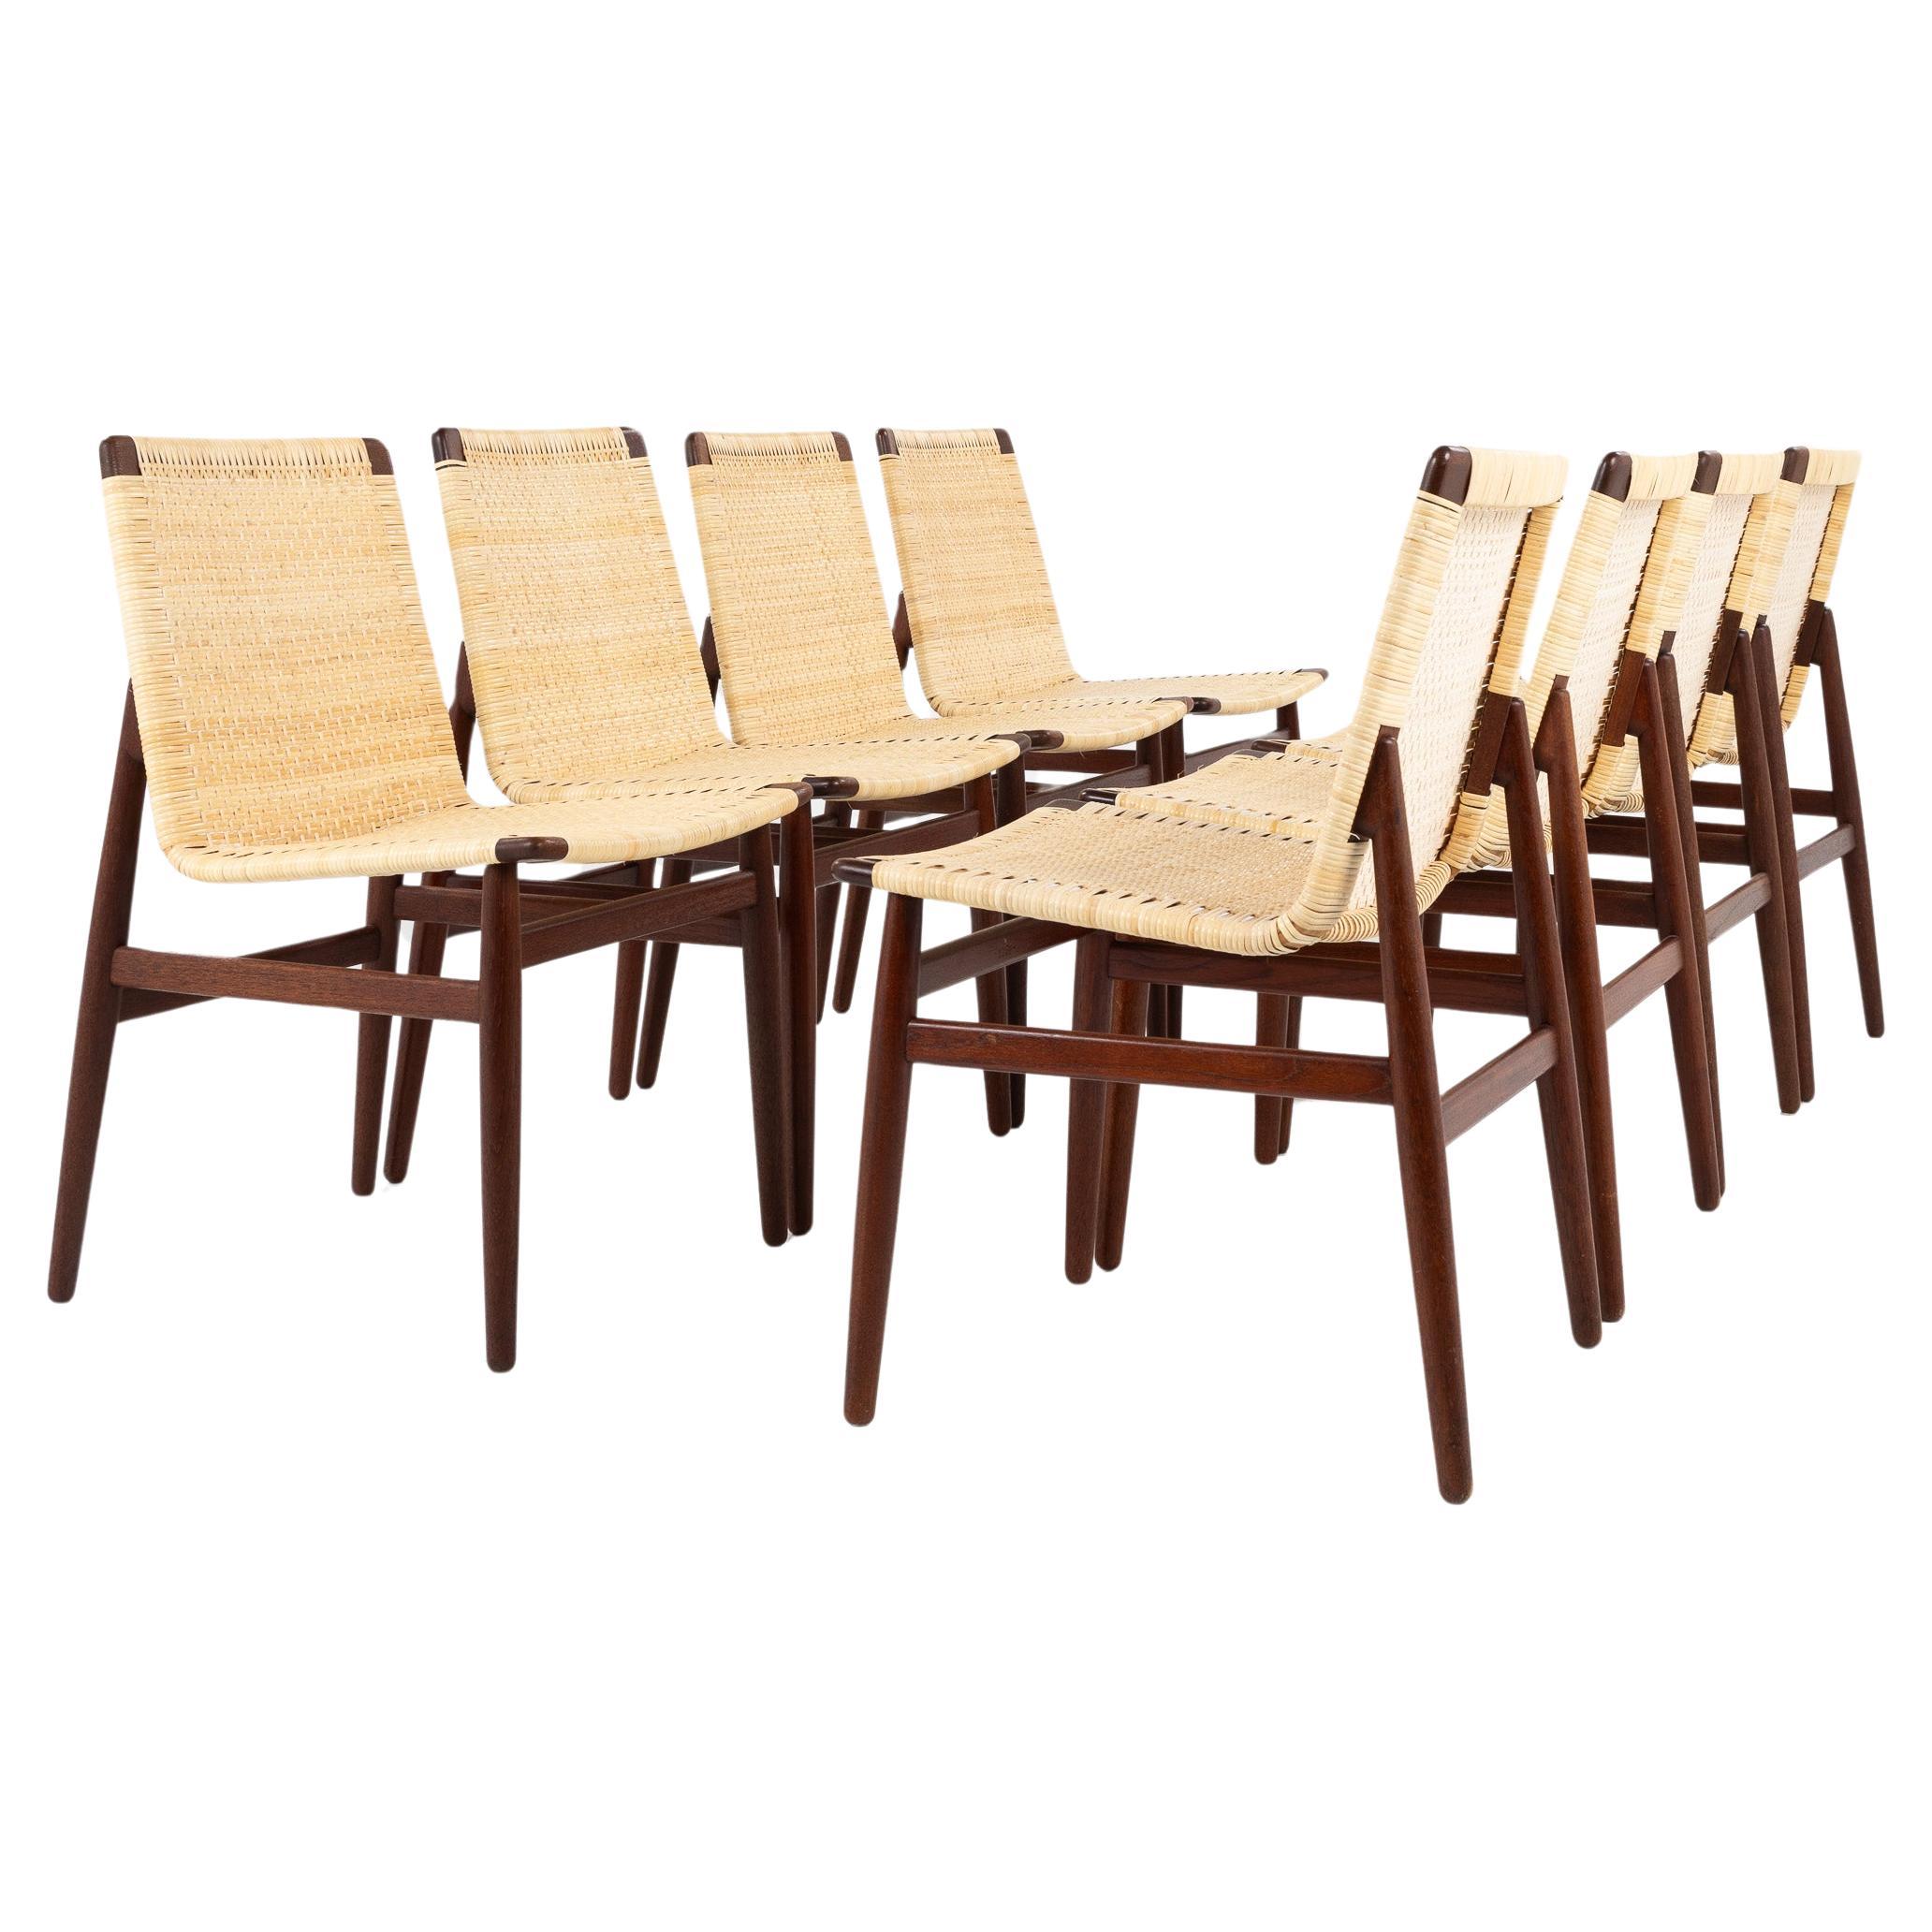 Set of 8 rare dining chairs in teak by Jørgen Høj For Sale